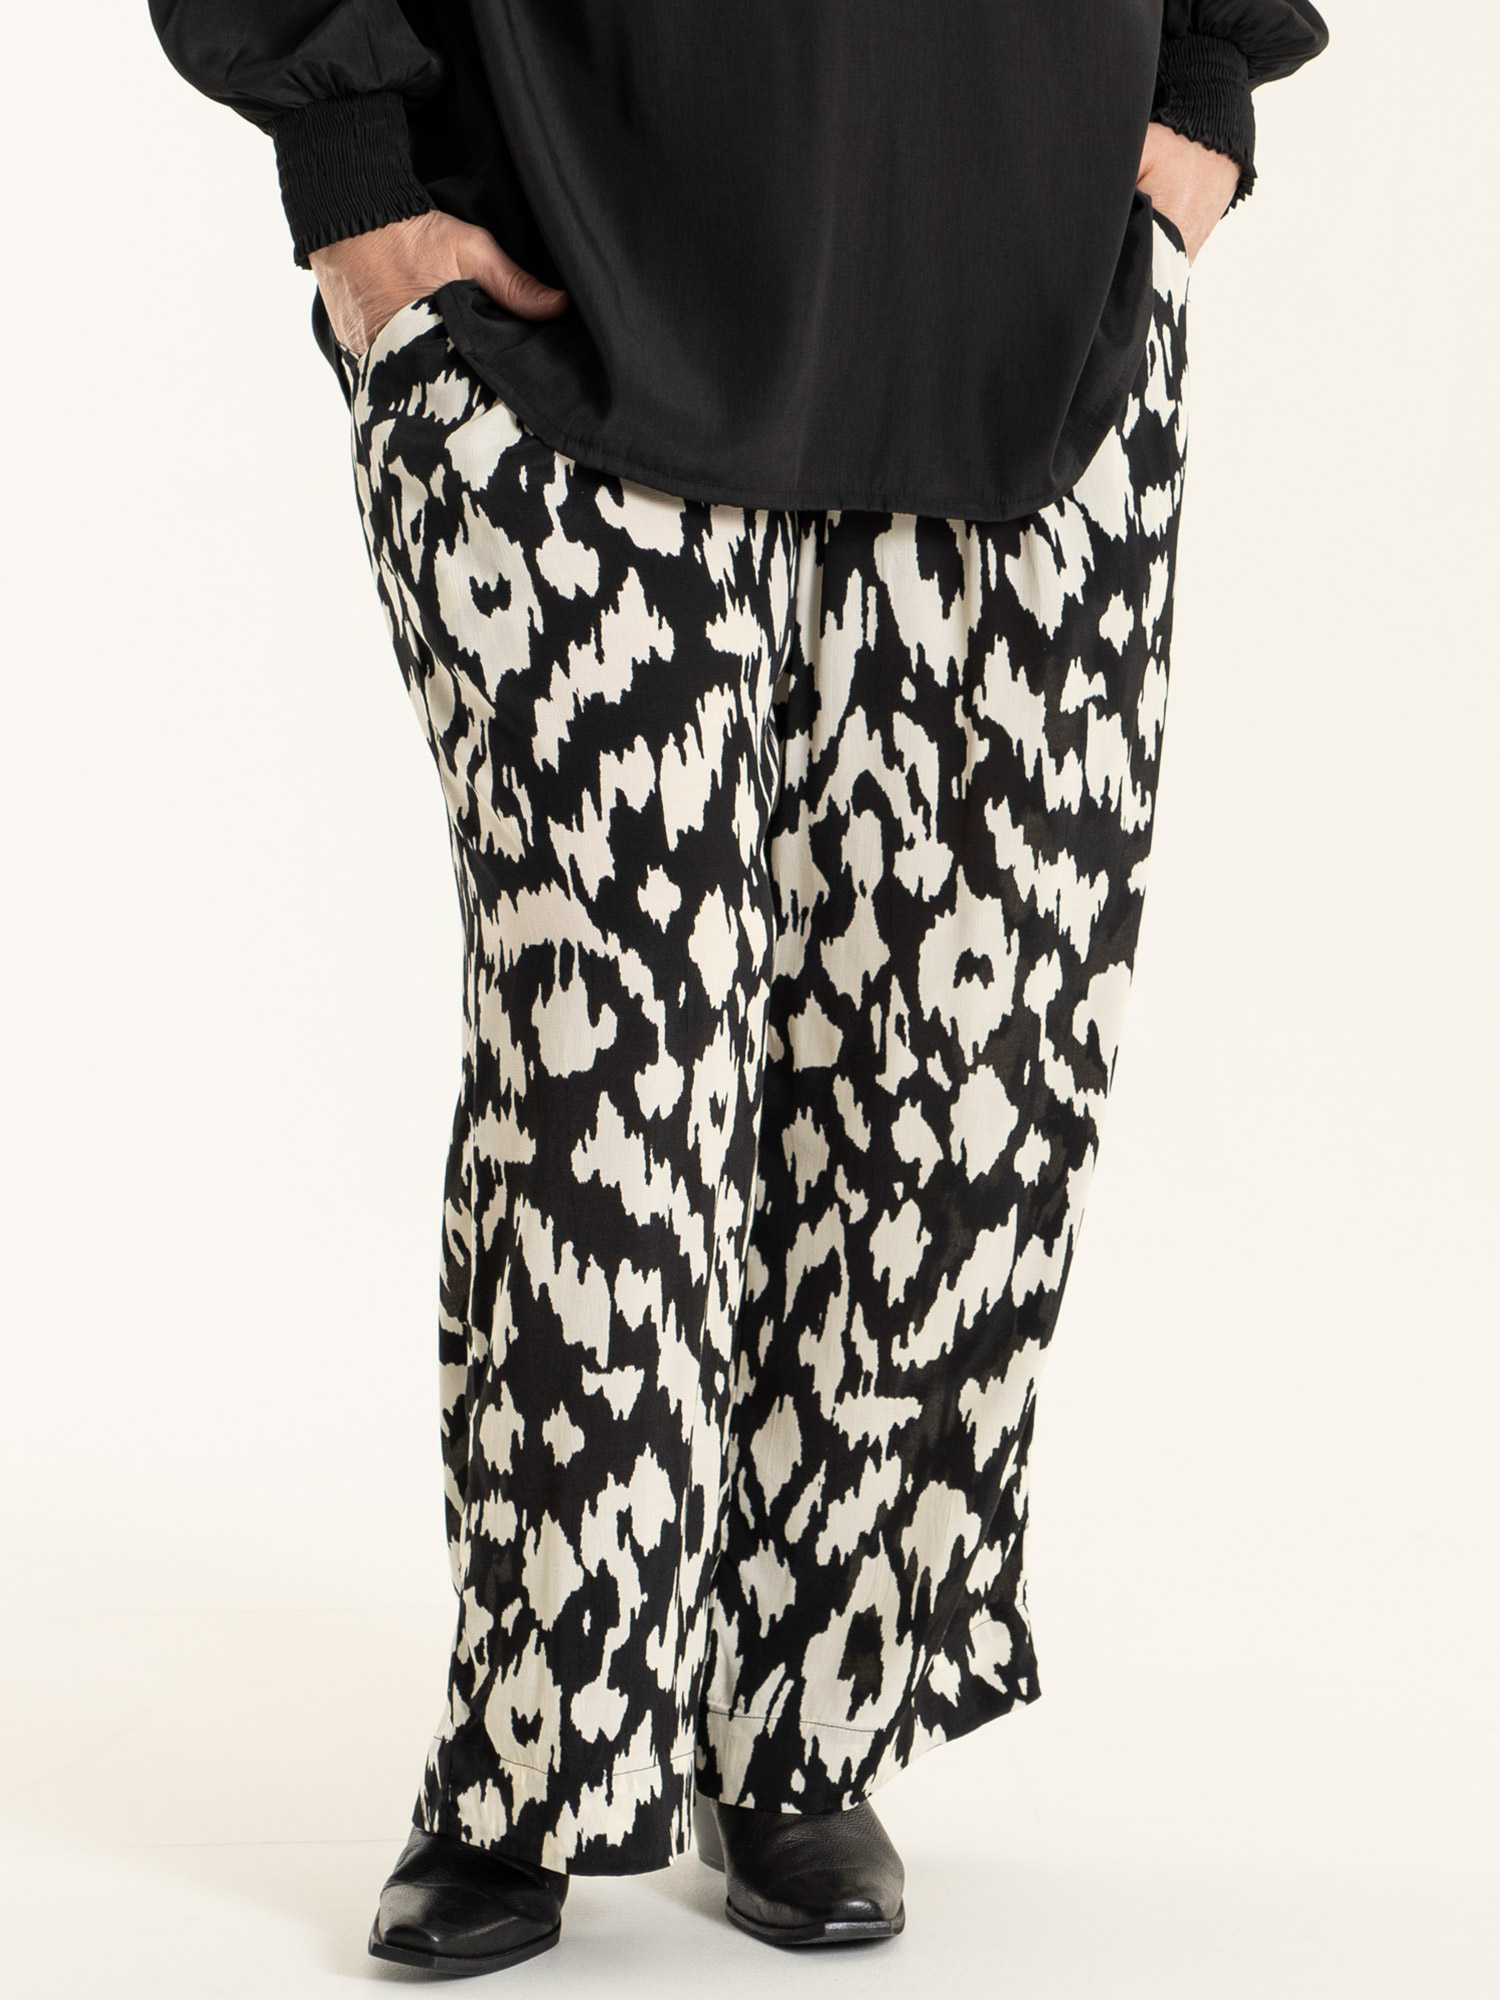 MARIE - Viskose bukser i sort og råhvid mønster fra Gozzip